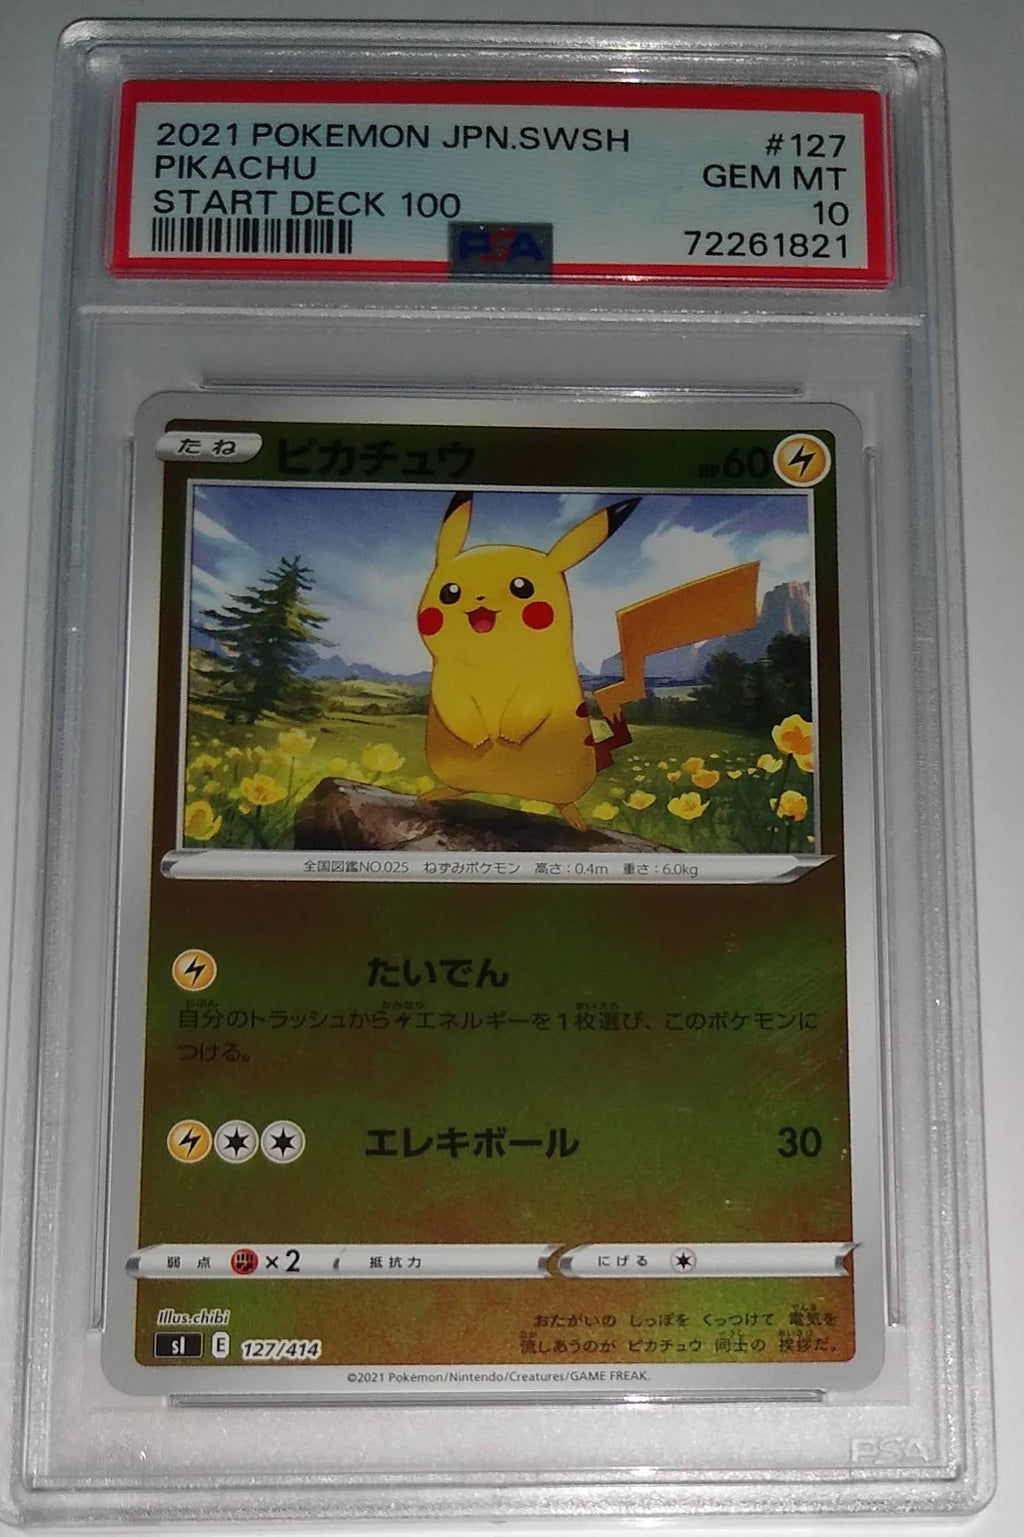 2021 Japanese Pokemon Start Deck 100 Pikachu Reverse Holo 127/414 PSA 10